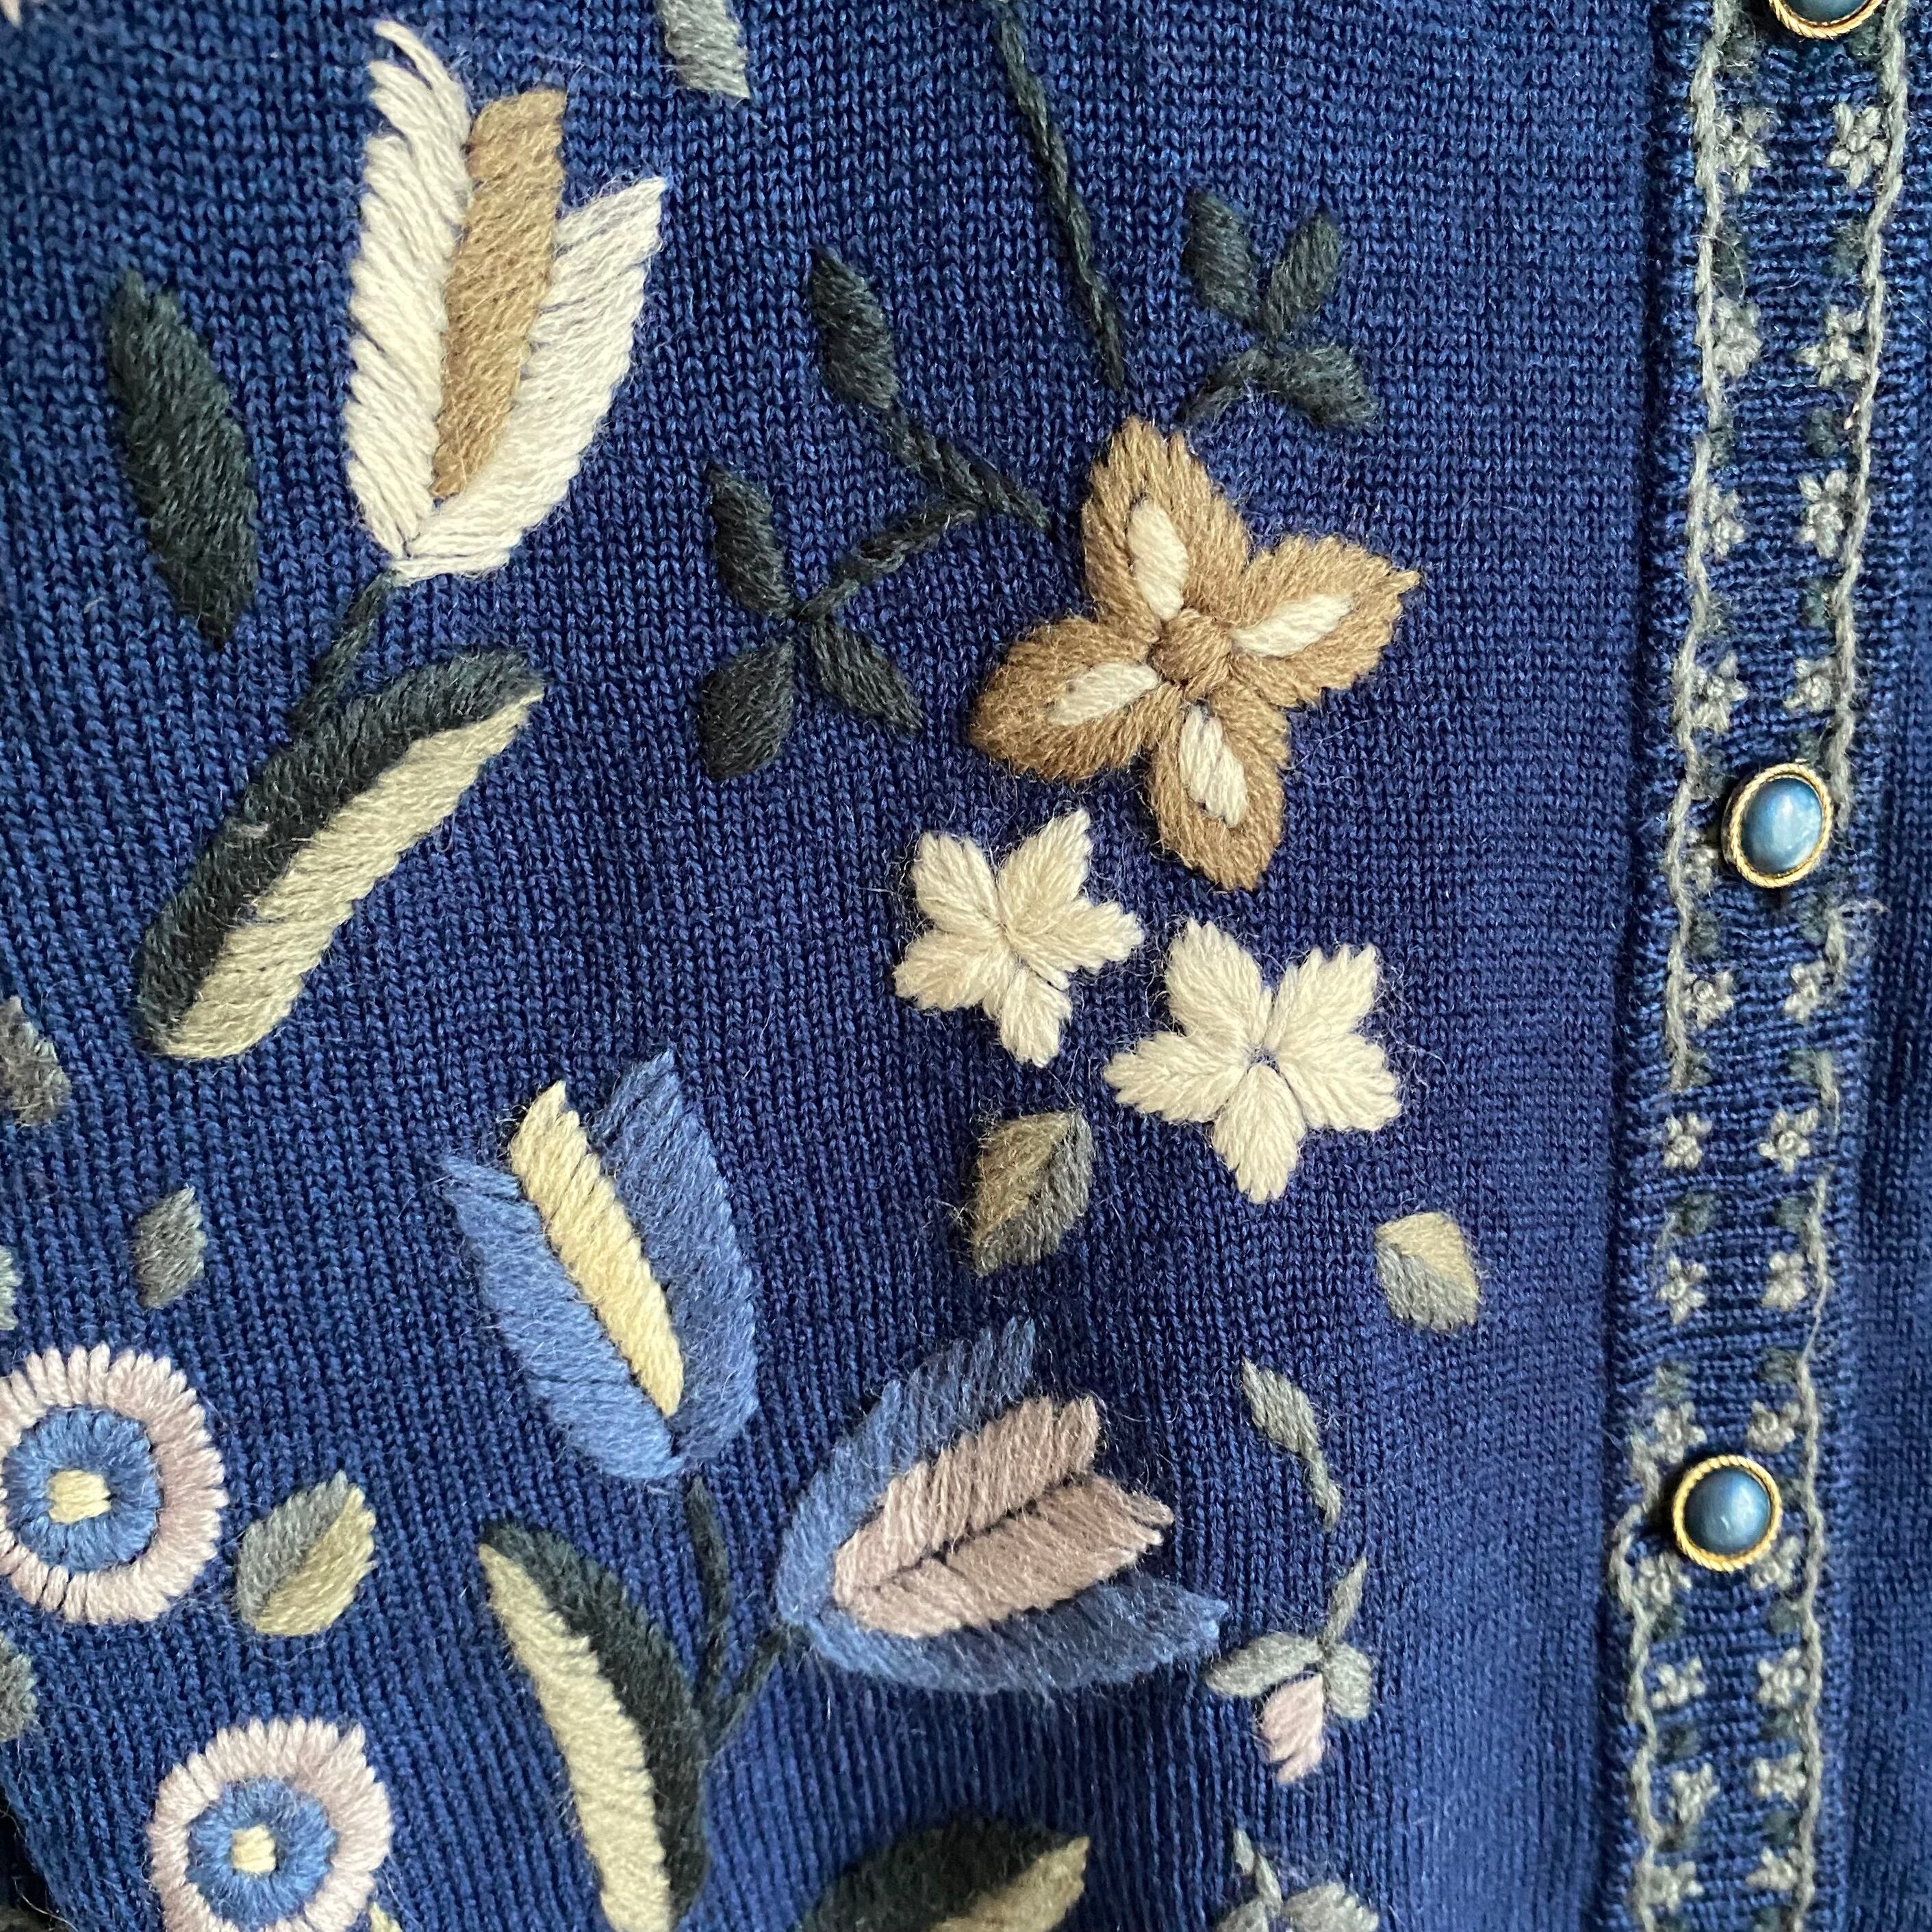 Vintage 80s retro botanical embroidery knit cardigan レトロ